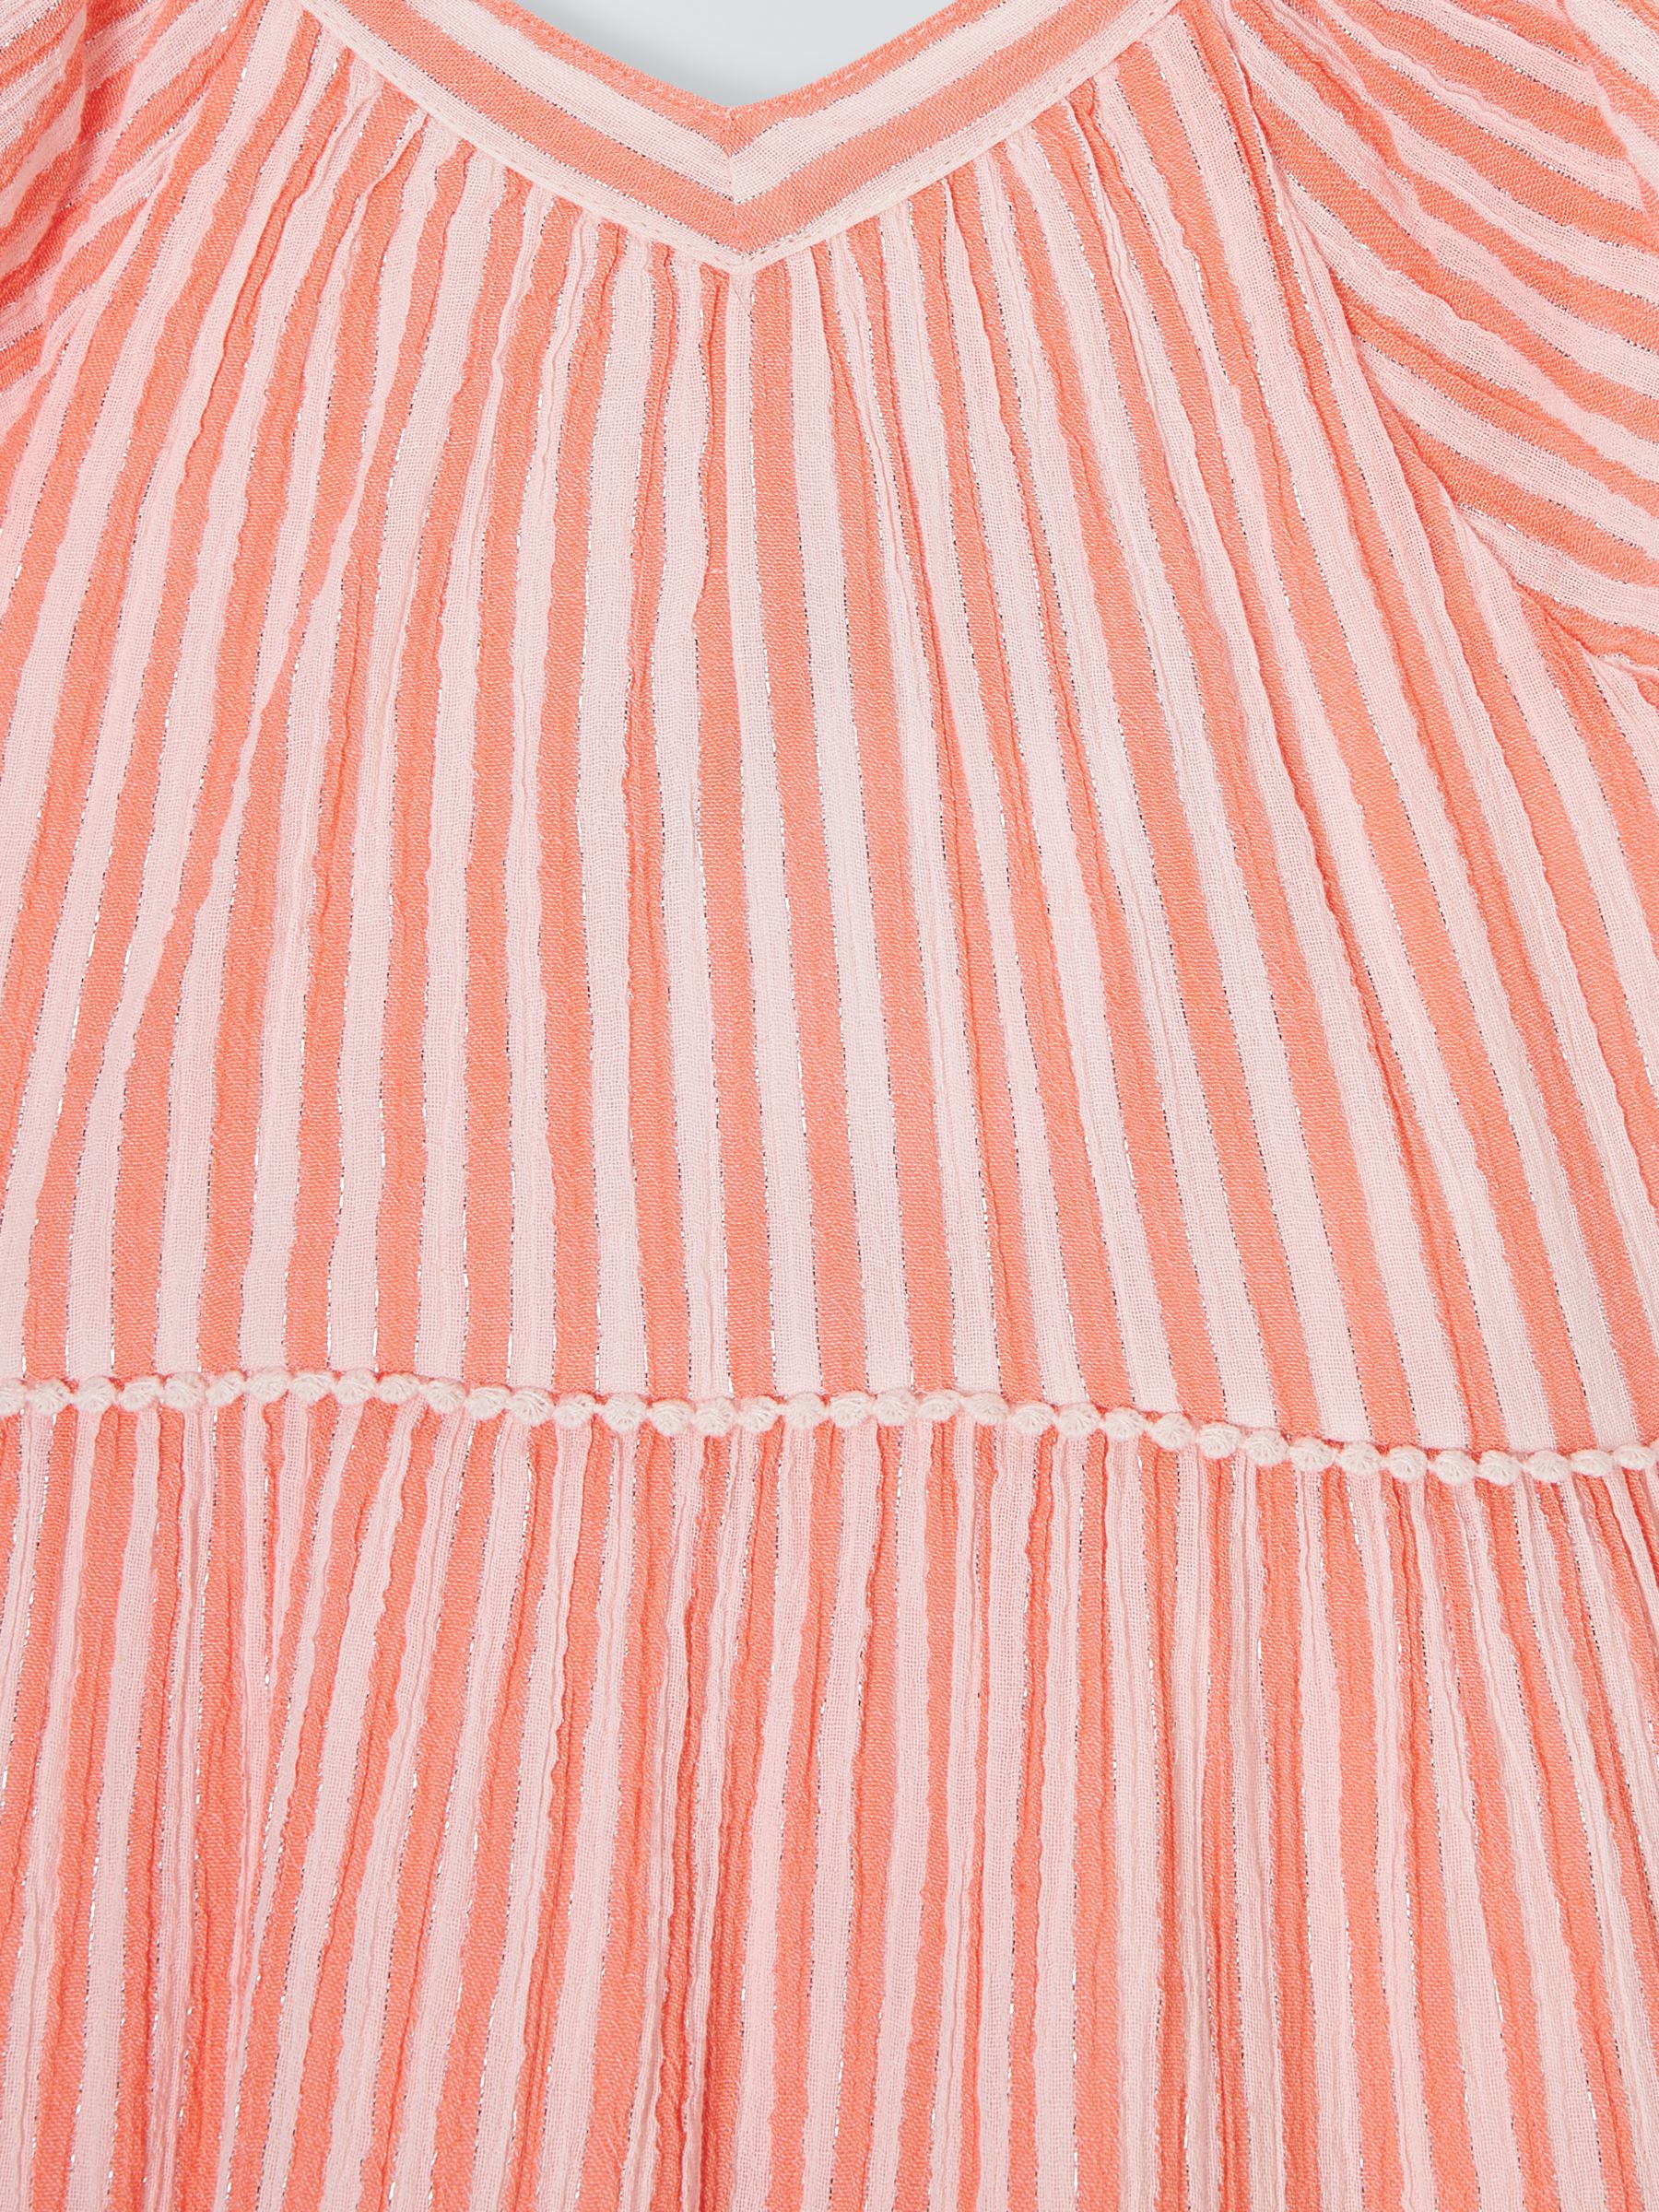 John Lewis Kids' Metallic Stripe Tiered Dress, White/Peach, 3 years